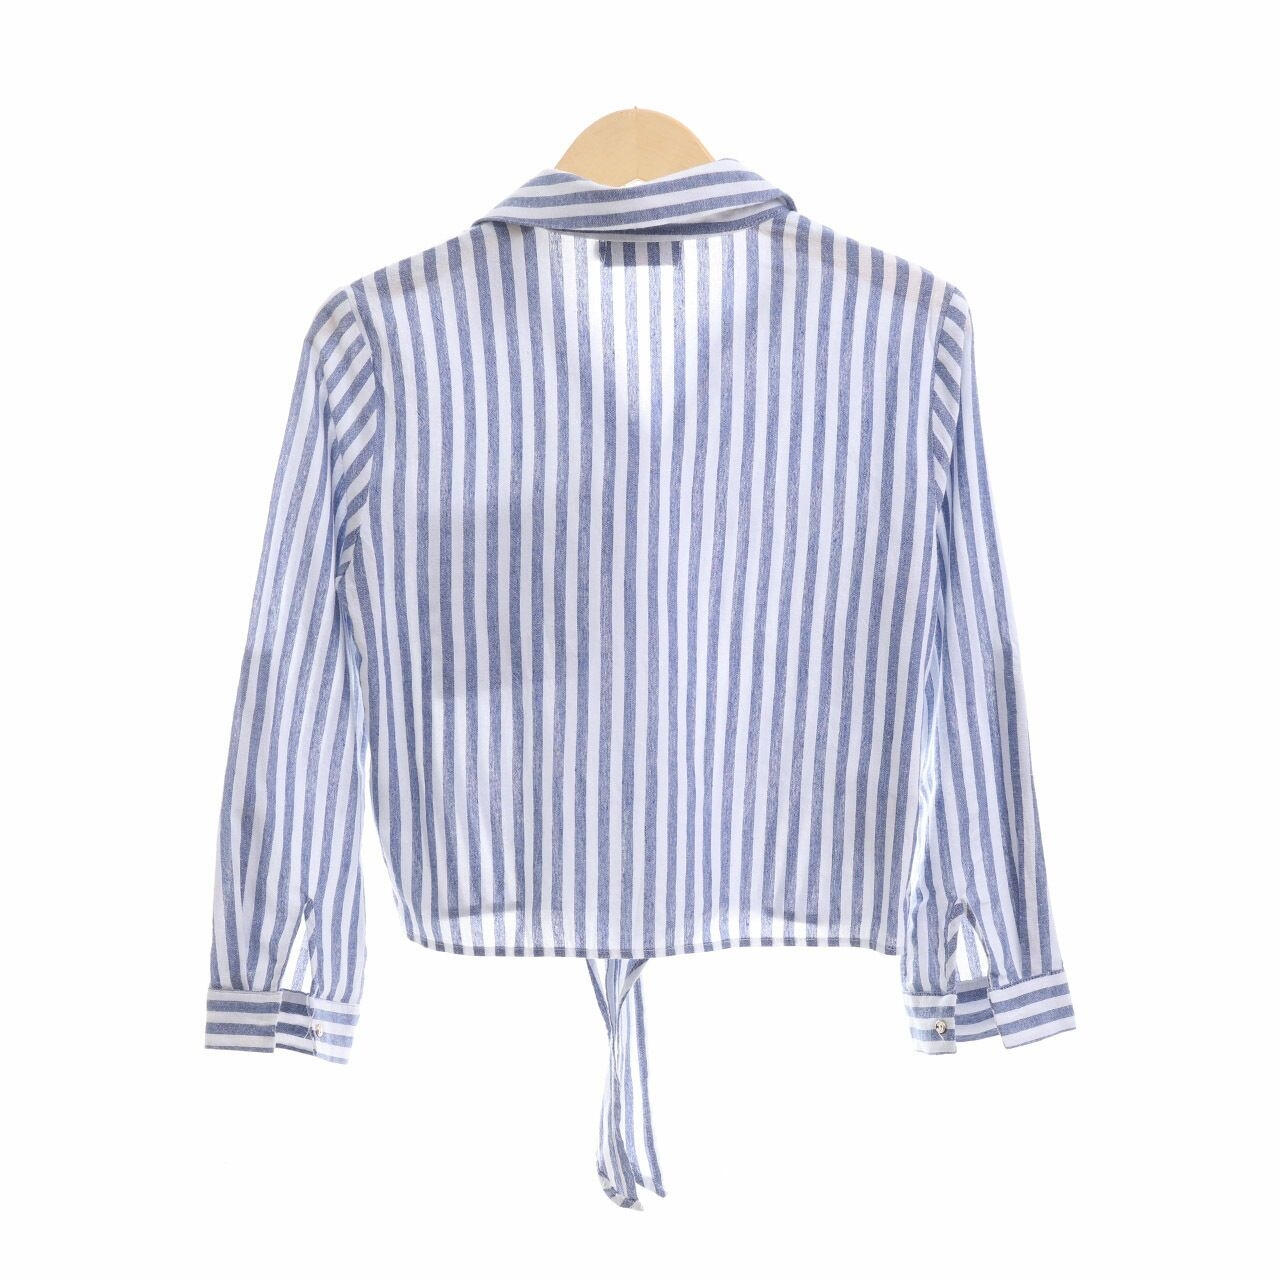 Temt Blue & White Stripes Shirt